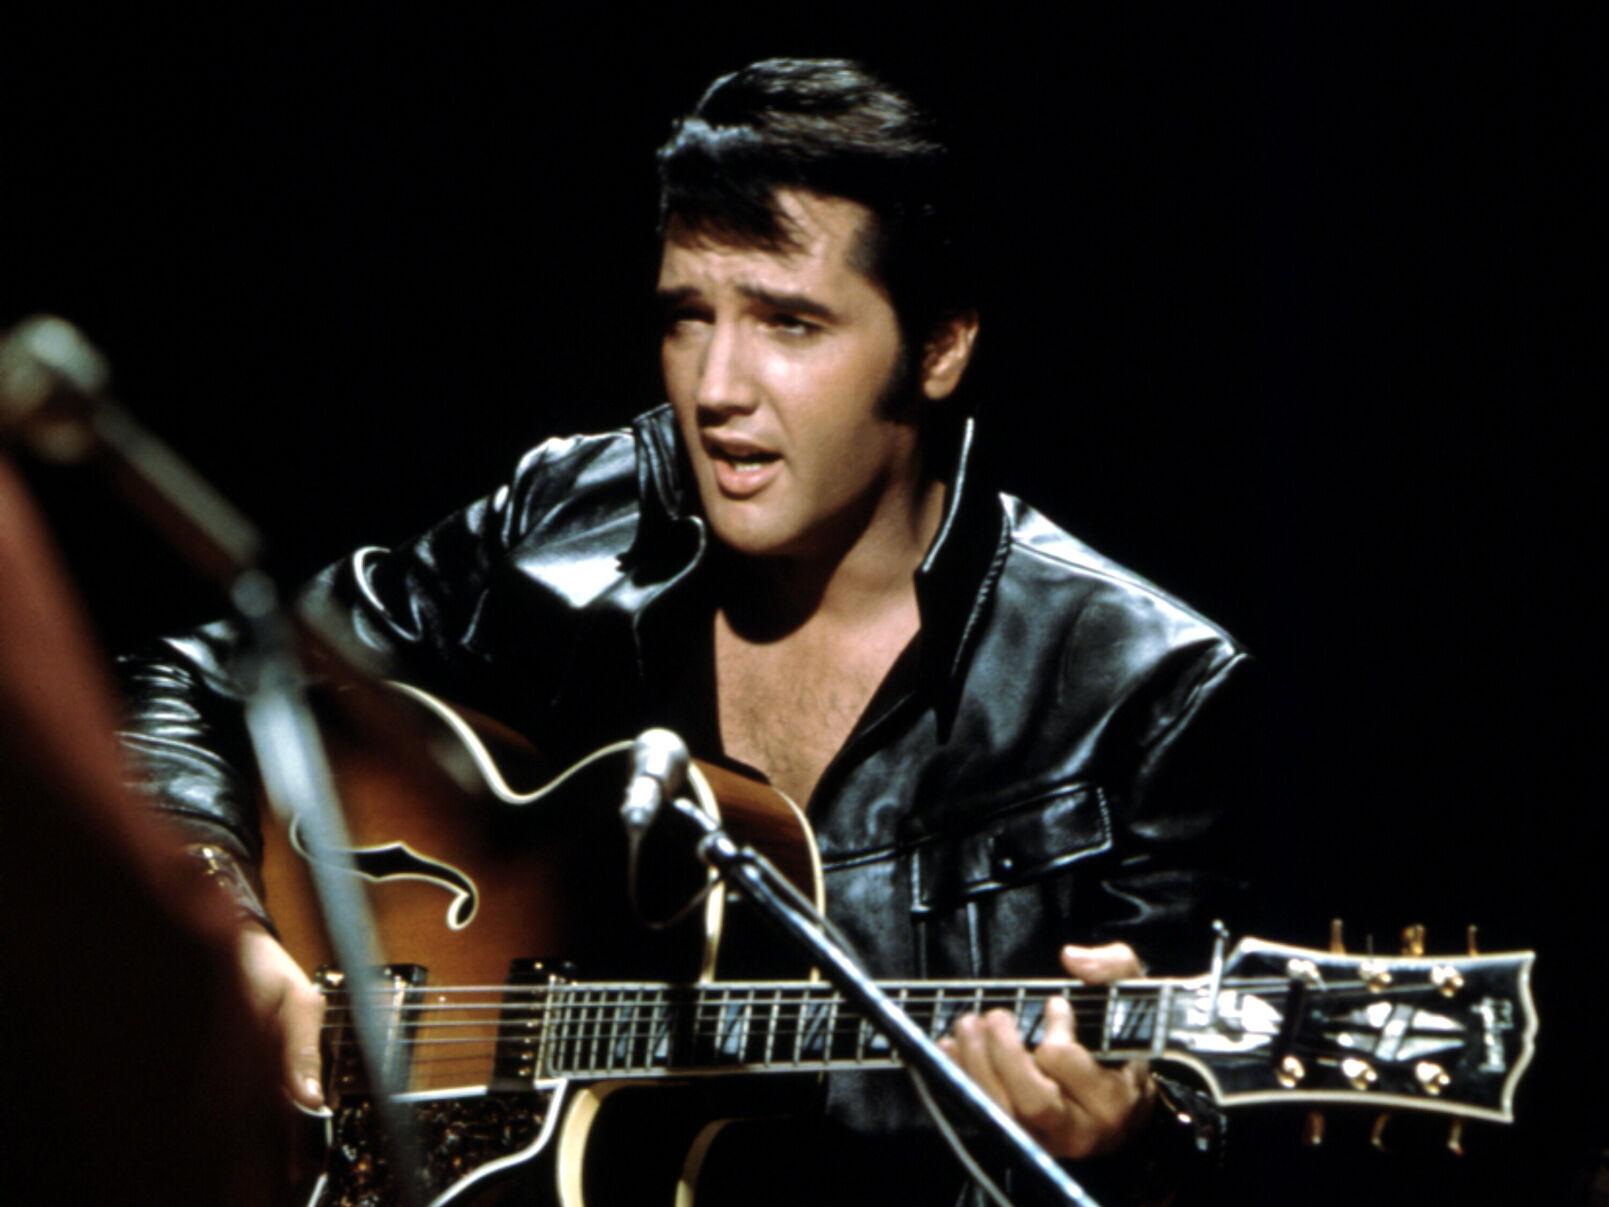 Get rocked! The biography of Elvis Presley